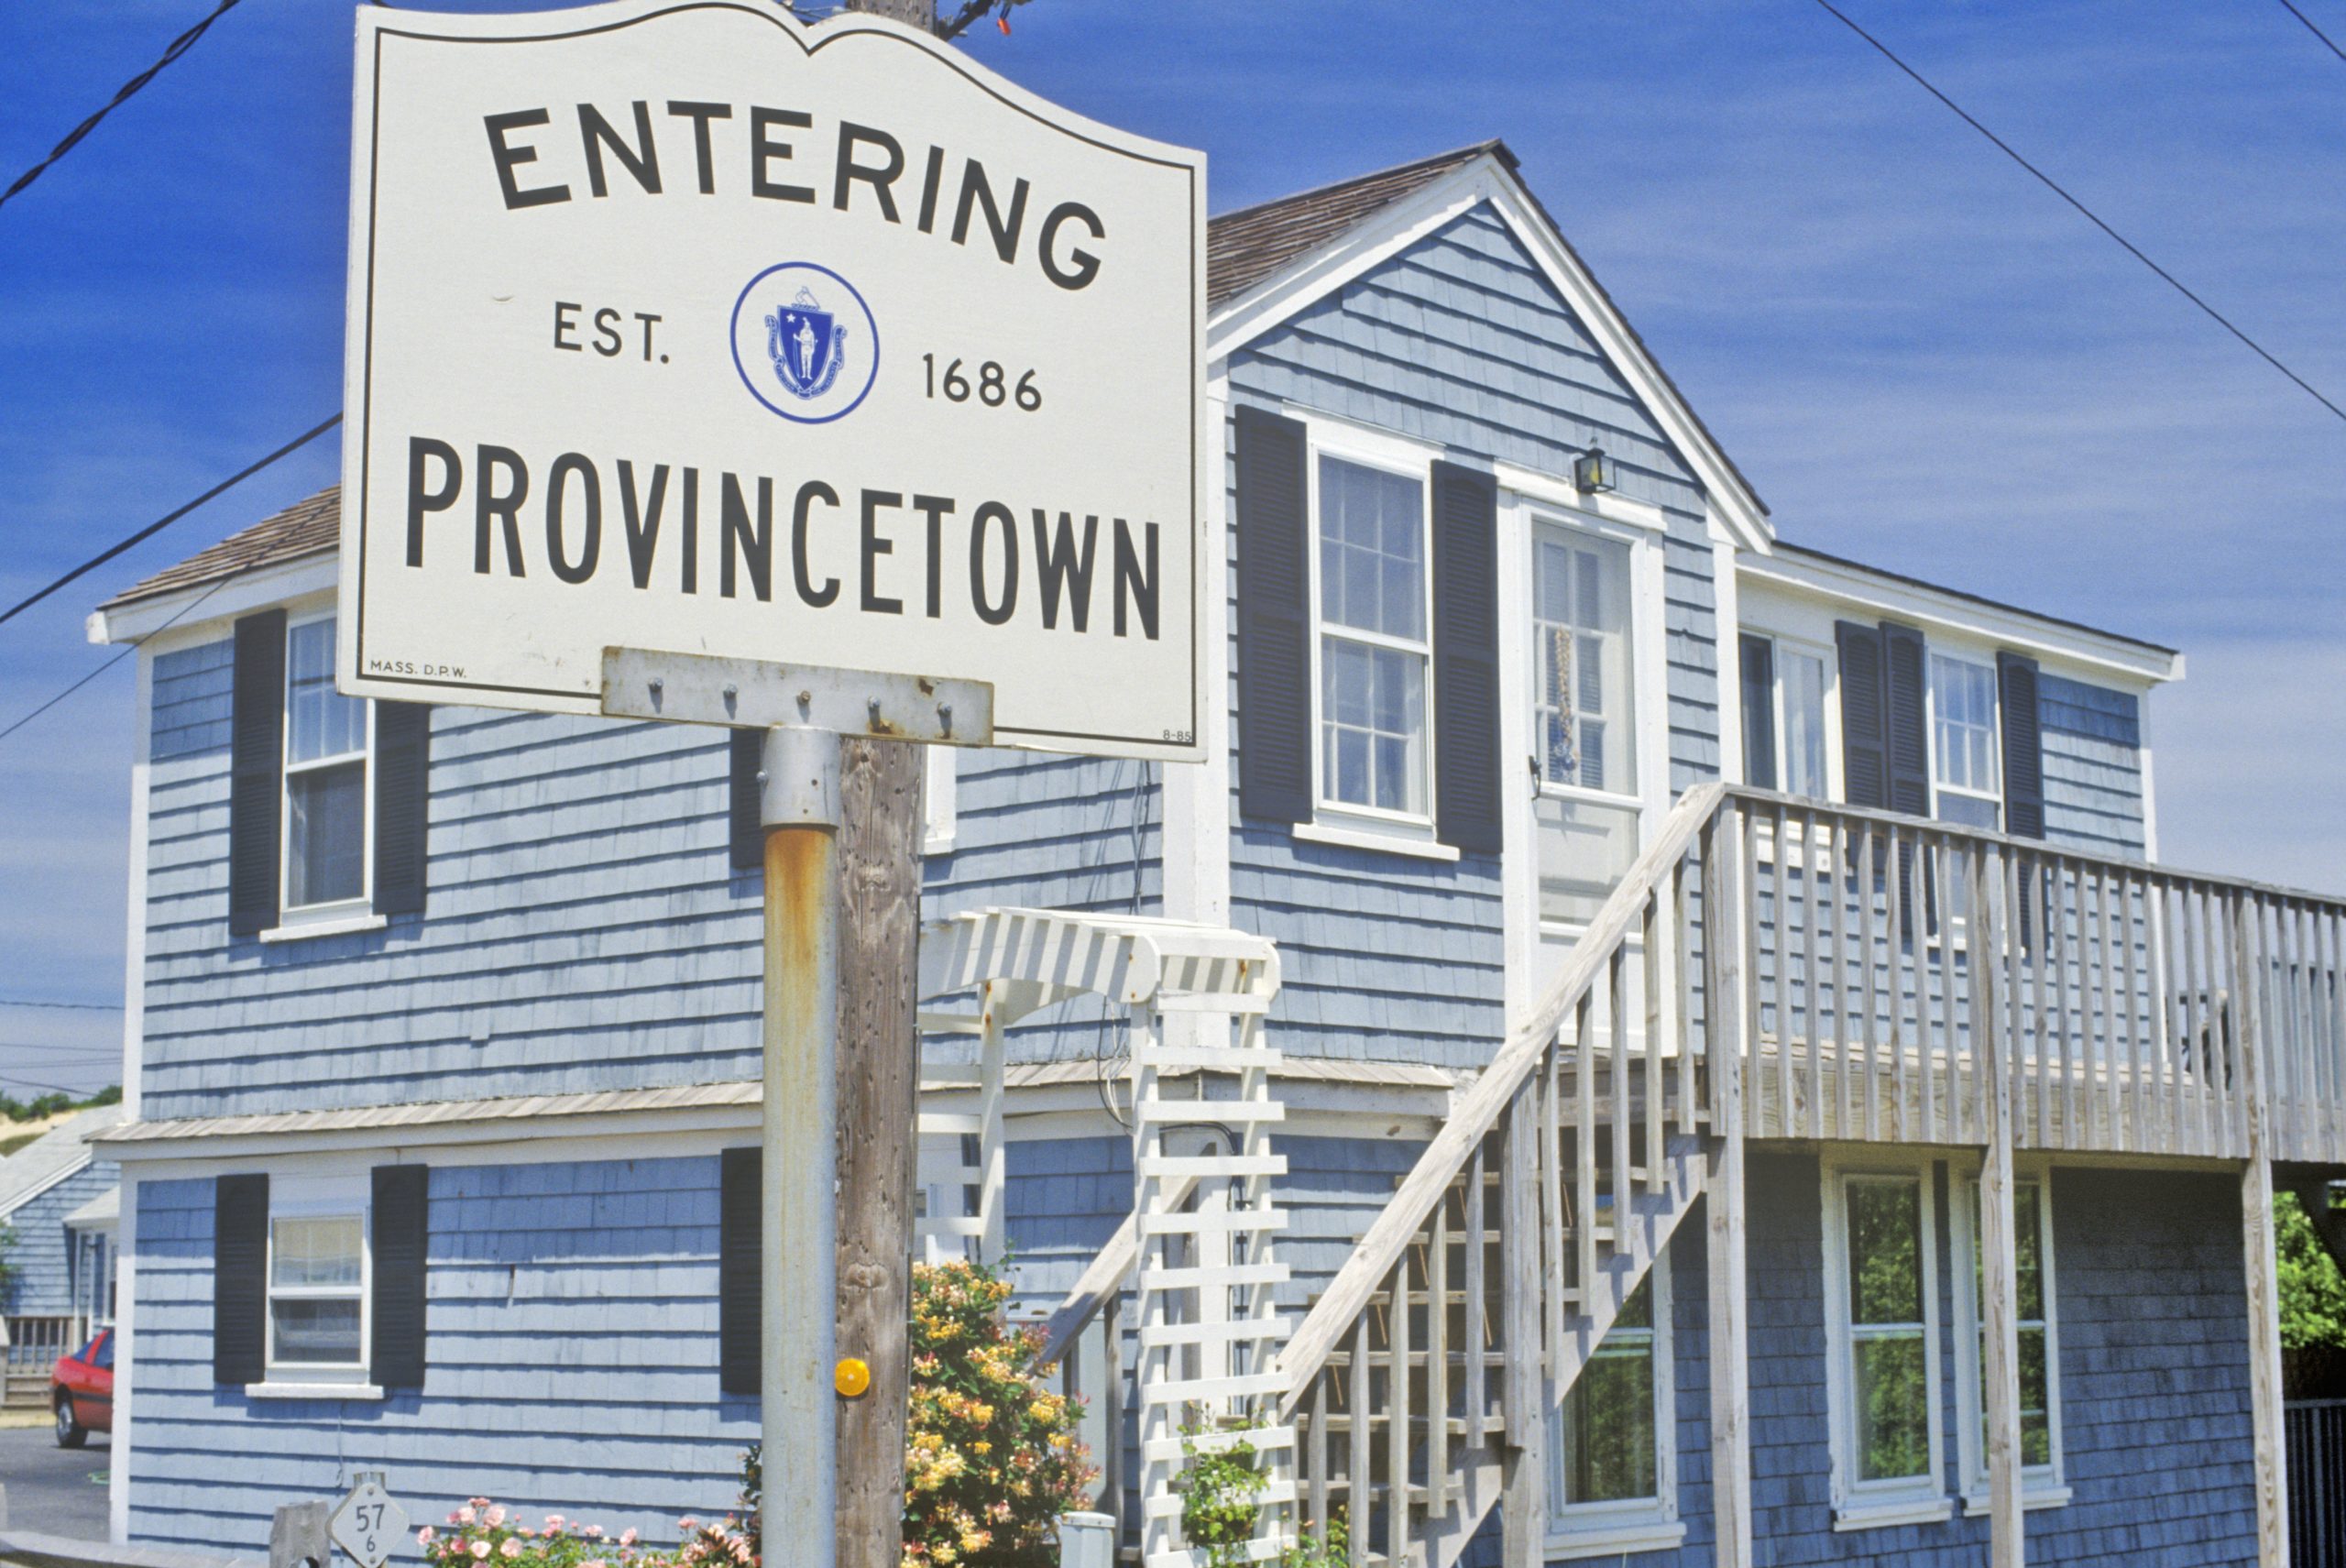 Entering Provincetown sign.